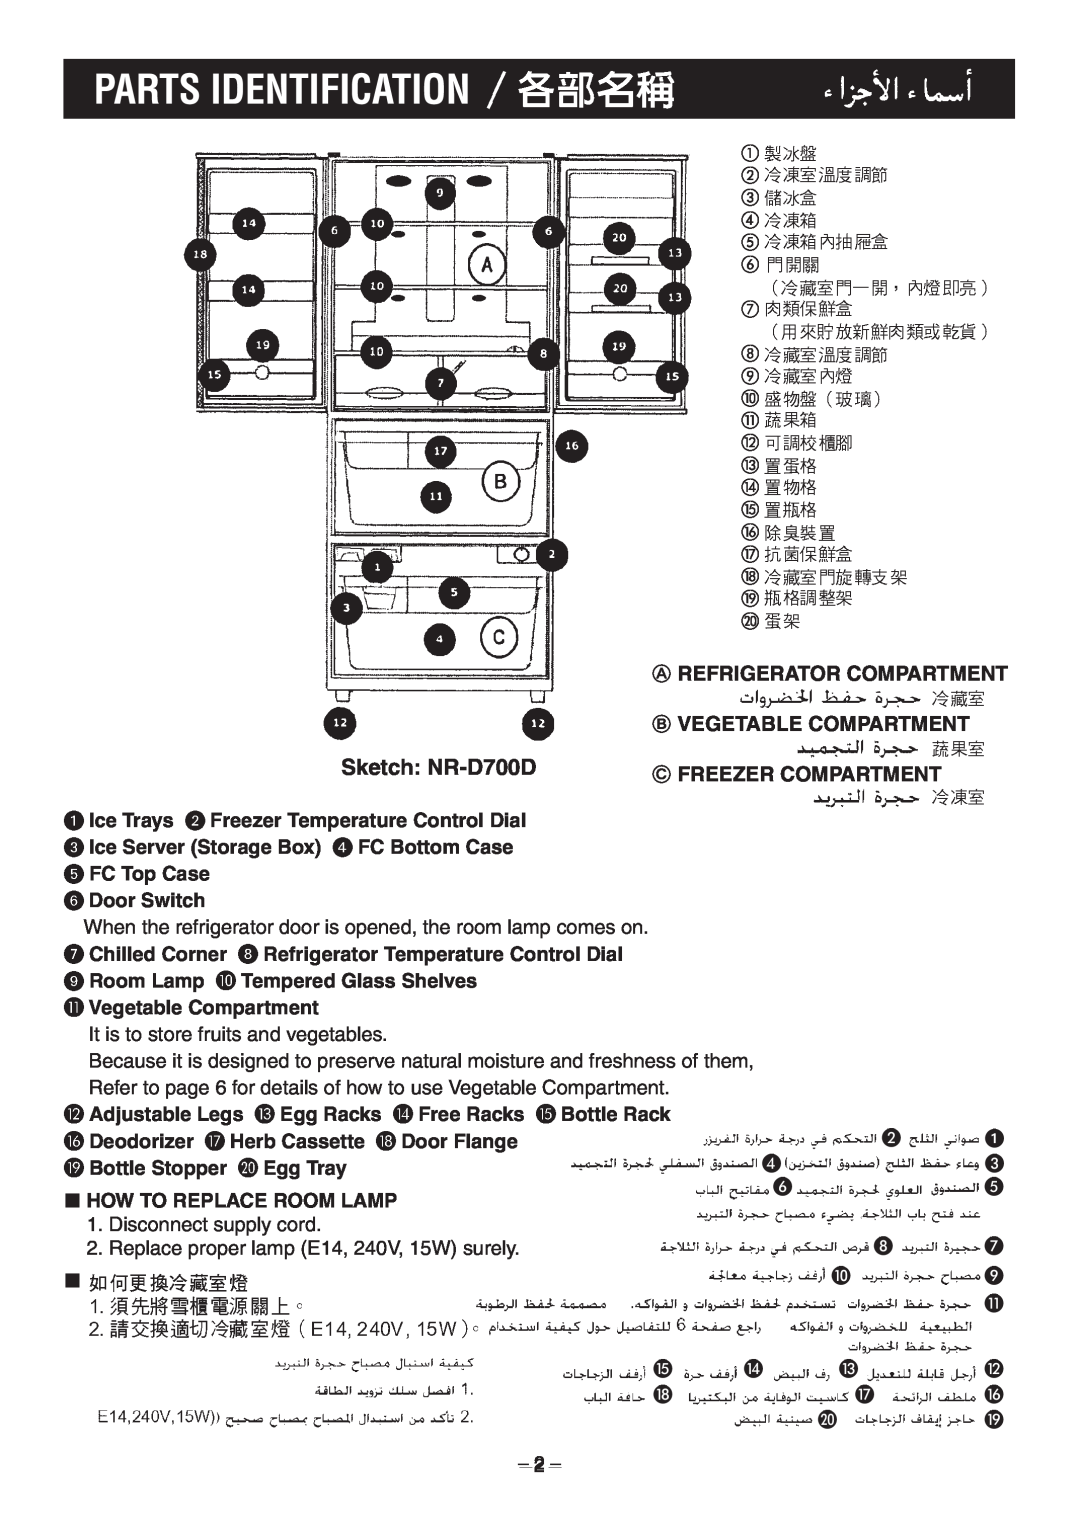 Panasonic operating instructions Parts Identification, Sketch NR-D700D 